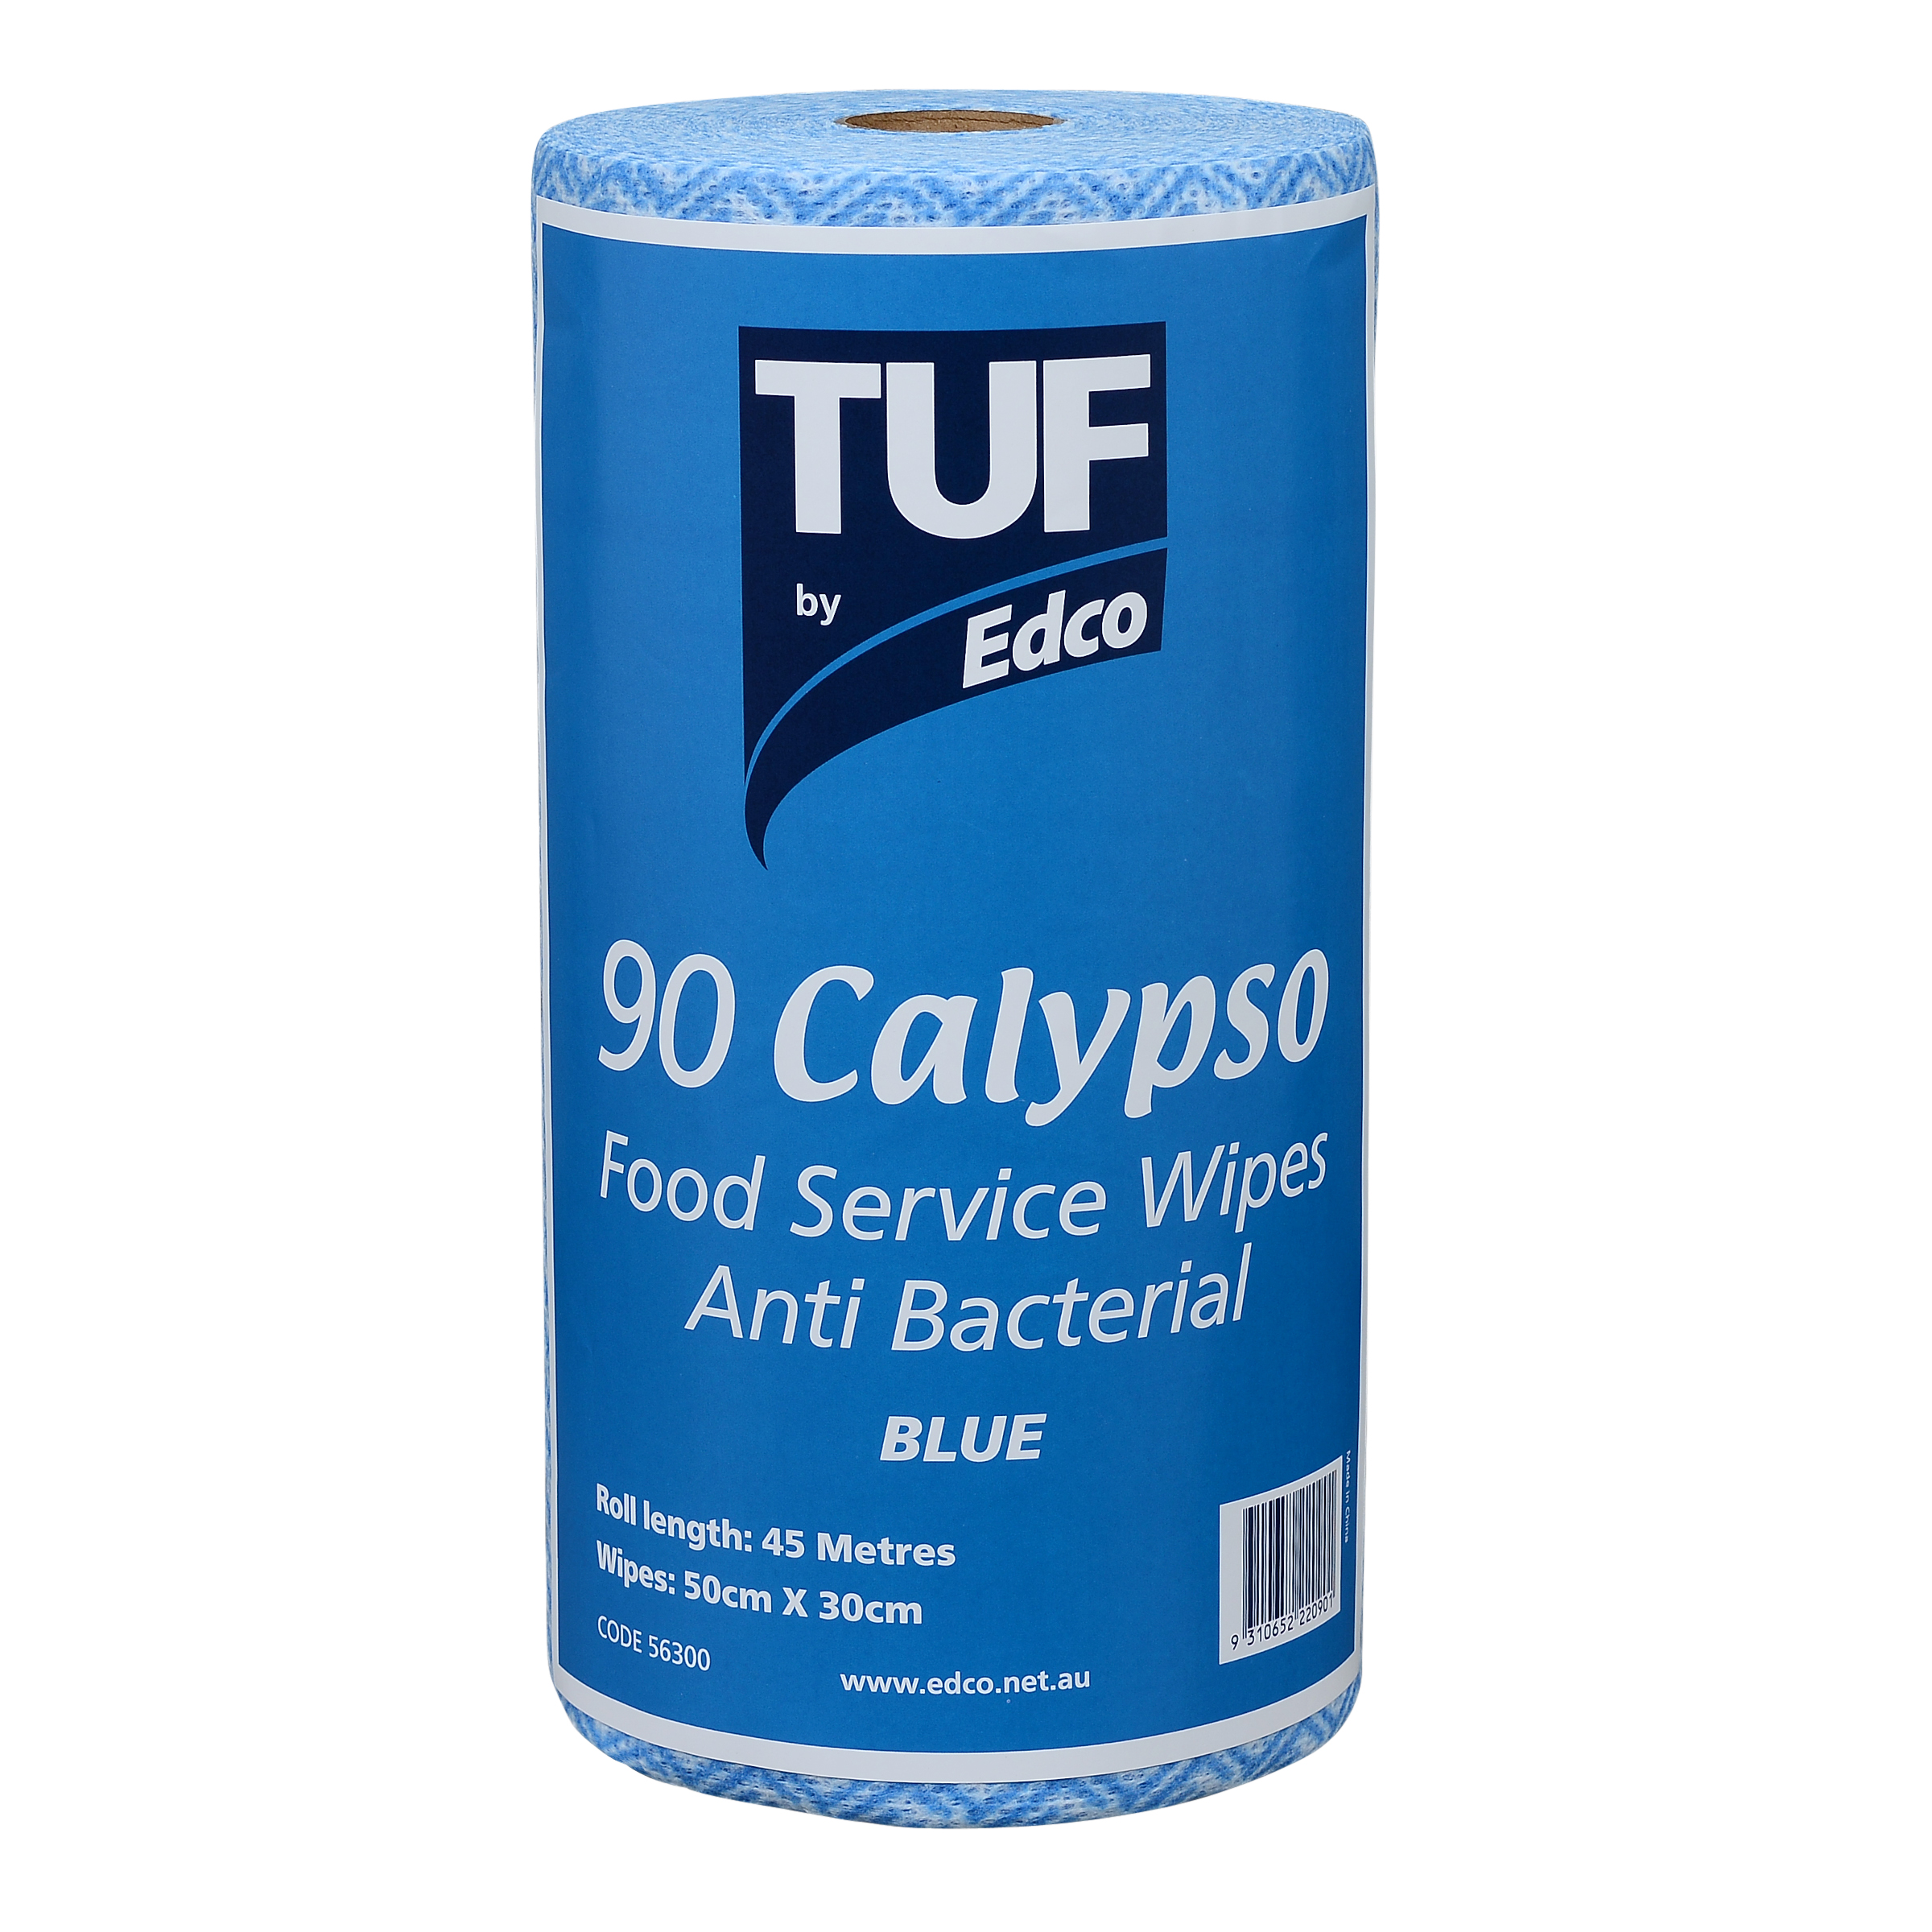 56300 Tuf by Edco Calypso Wipes – Blue IP